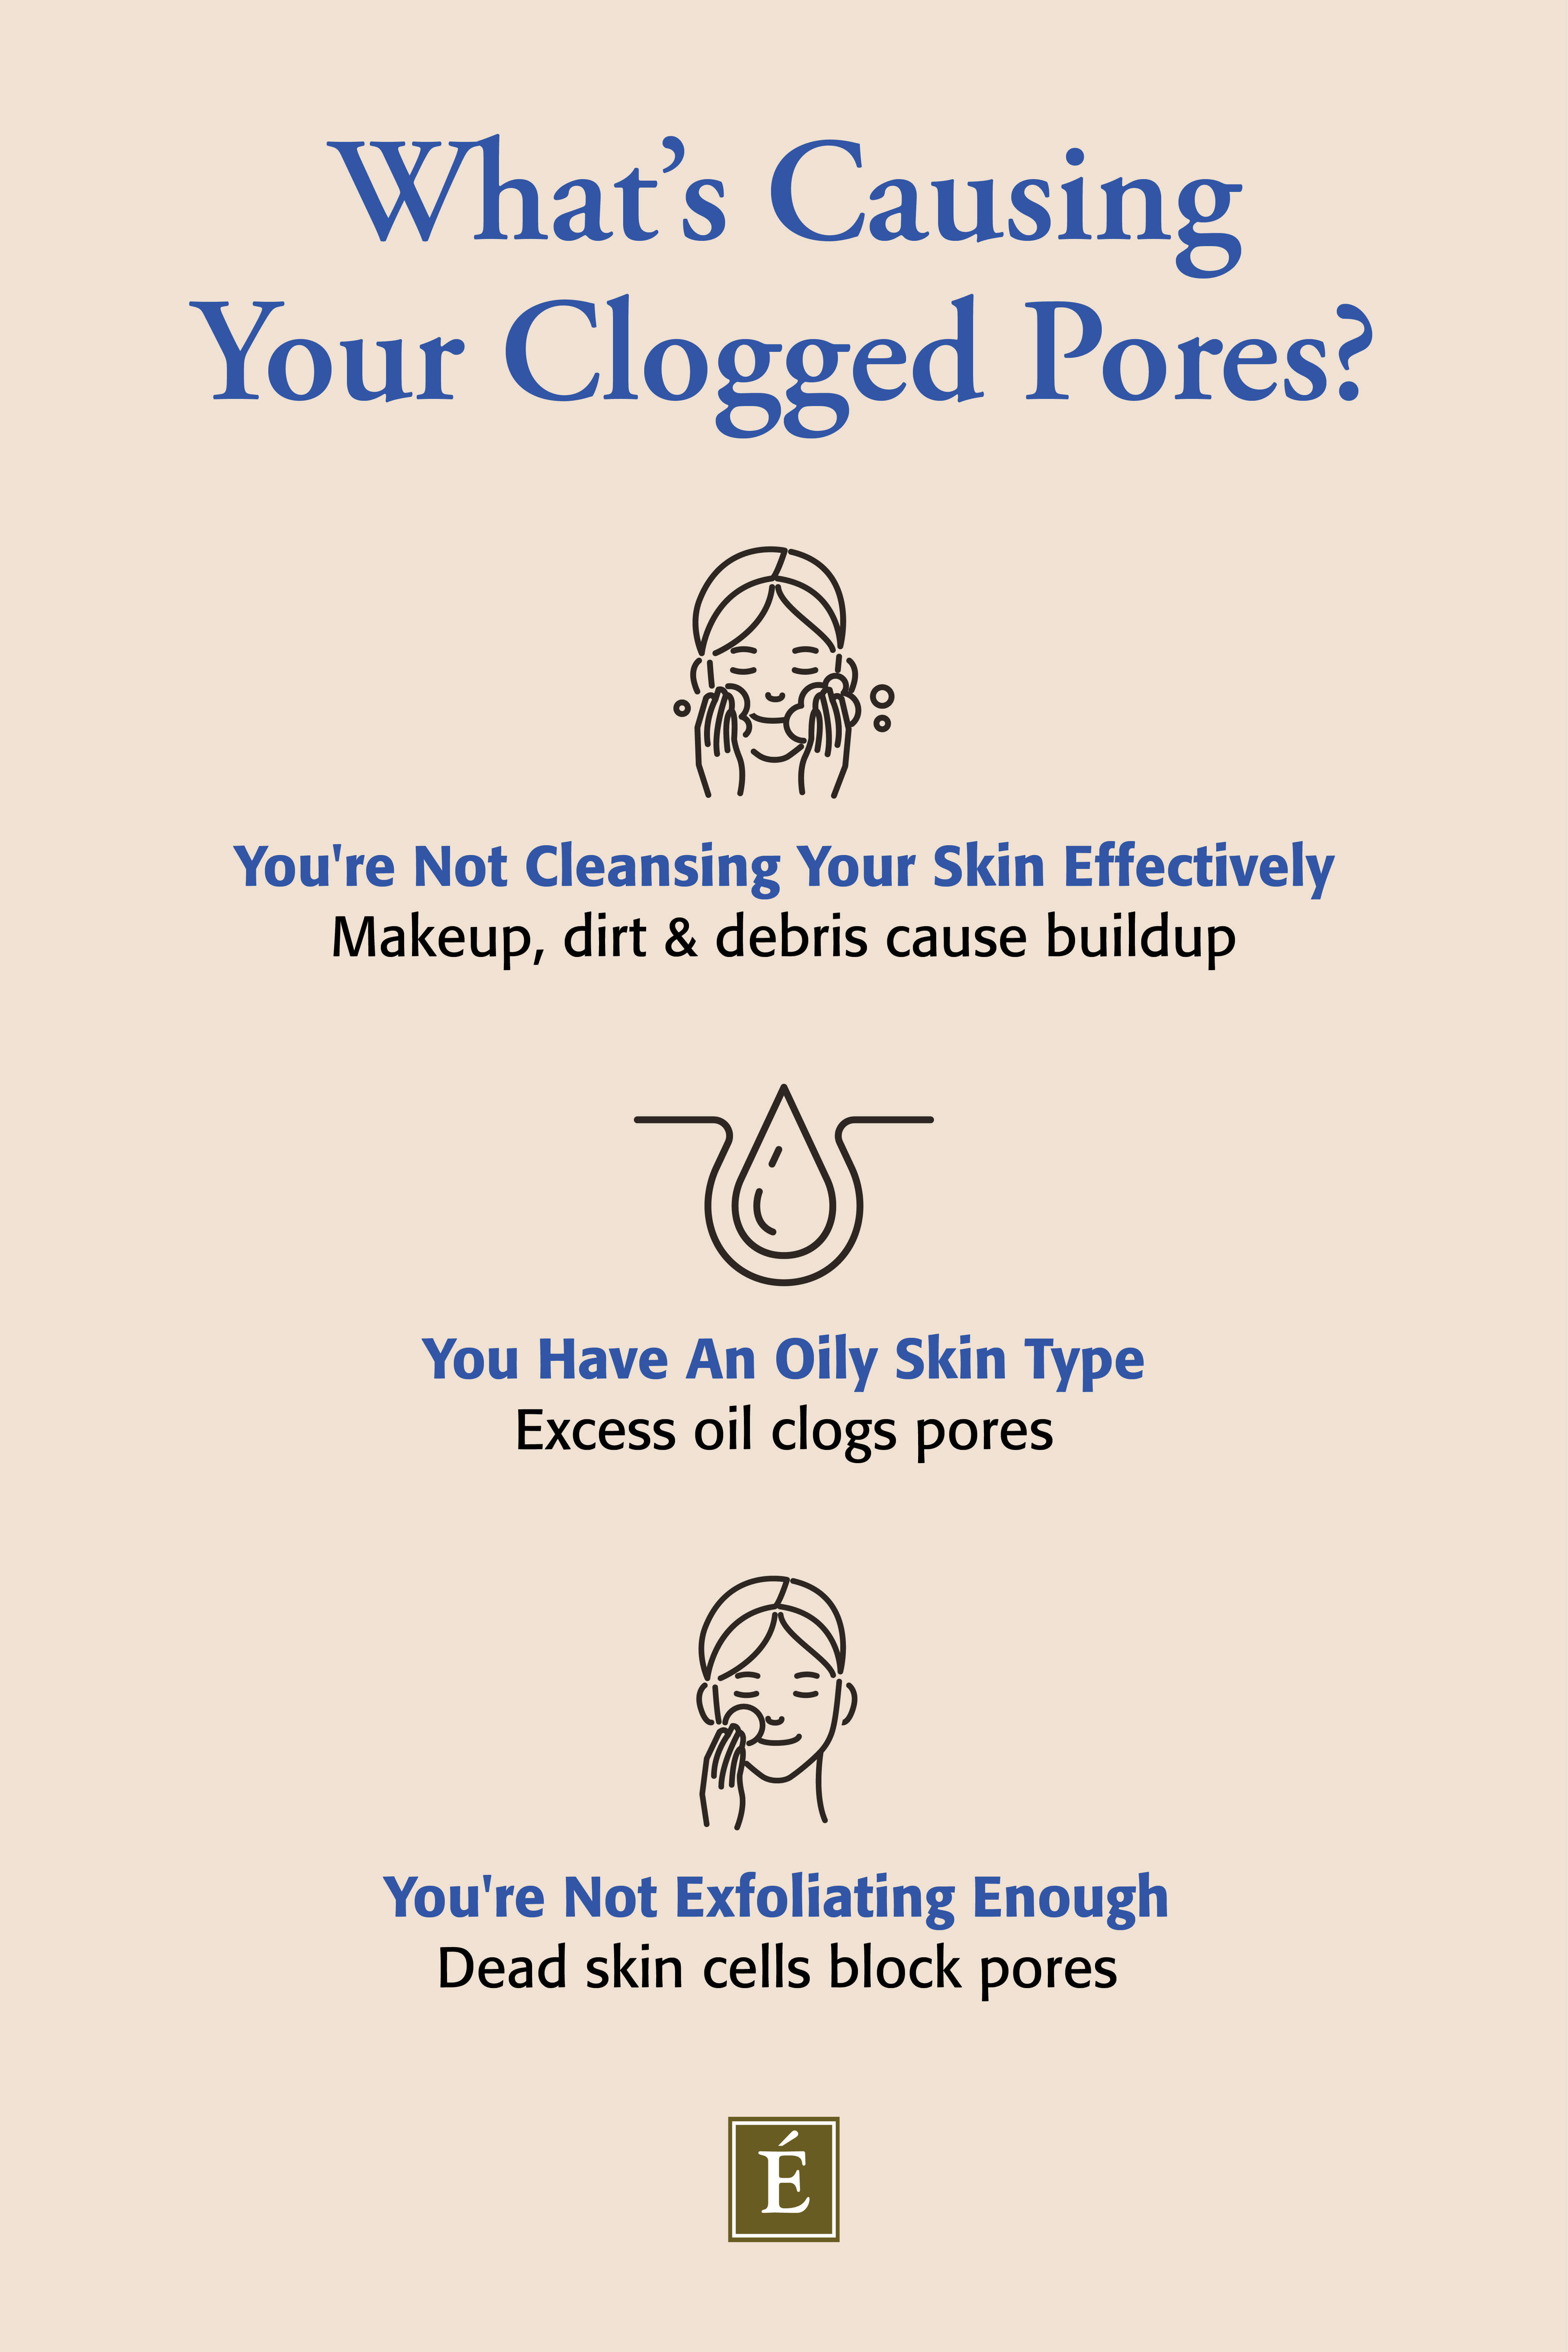 Clogged pores infographic